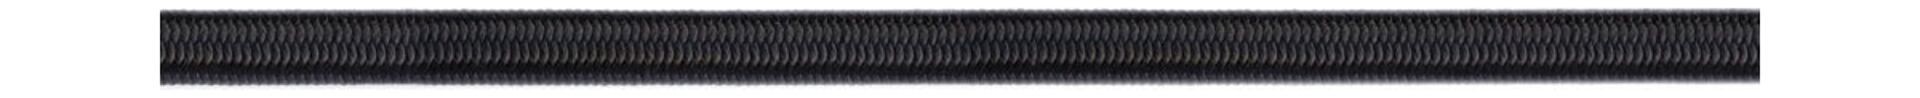 Шнур эластичный SEA Black, d 6 мм, L 100 м